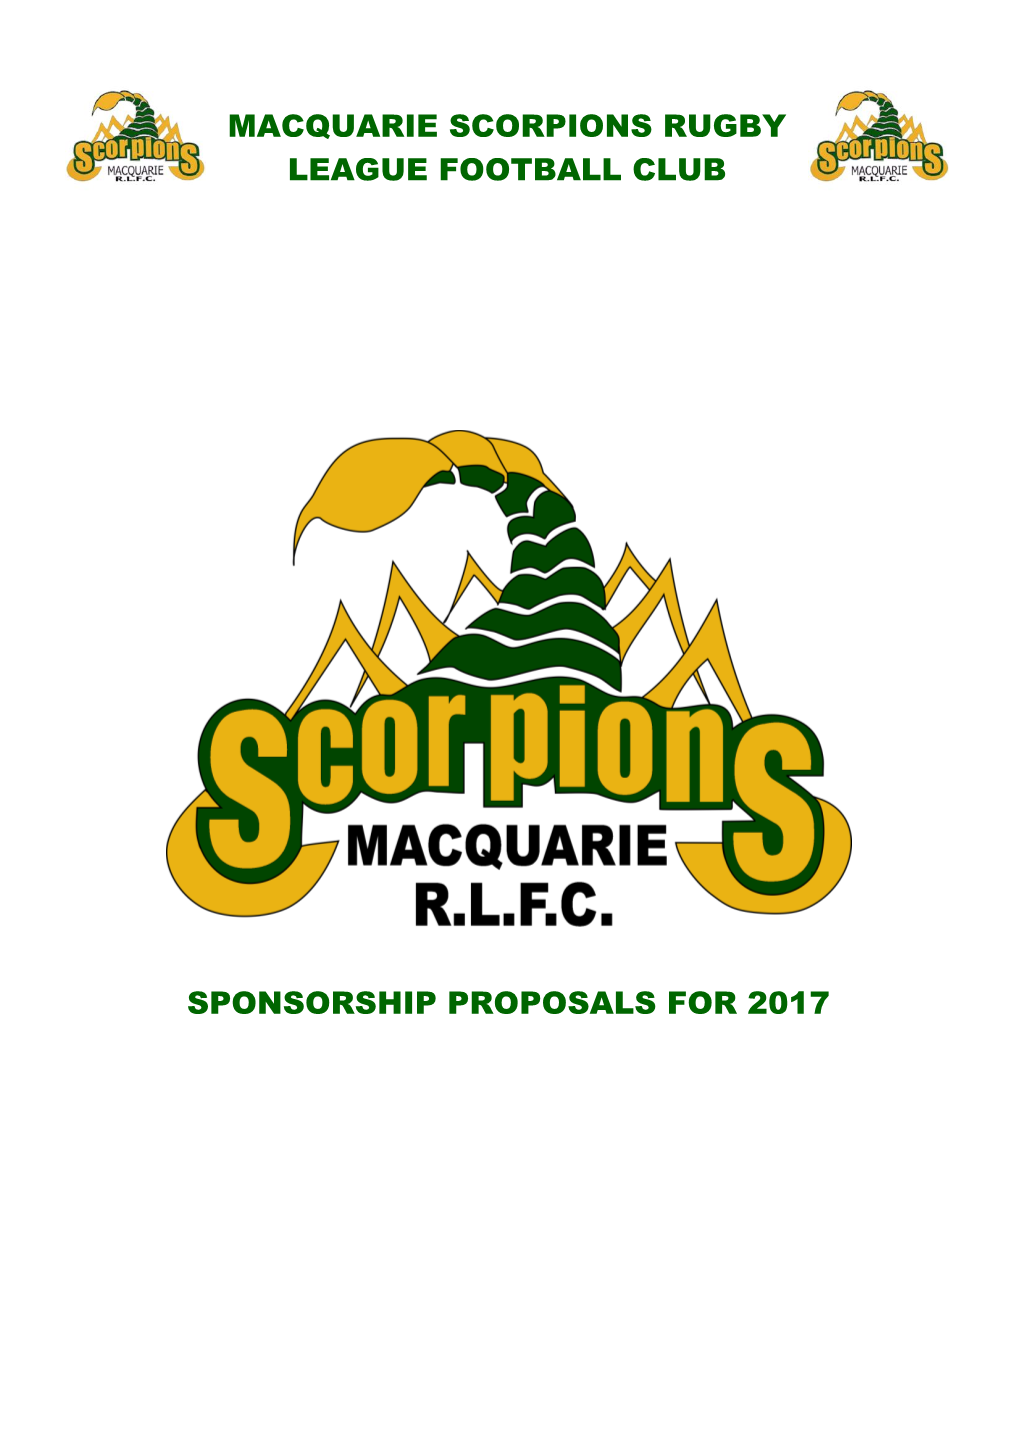 Macquarie Scorpions Rugby League Football Club